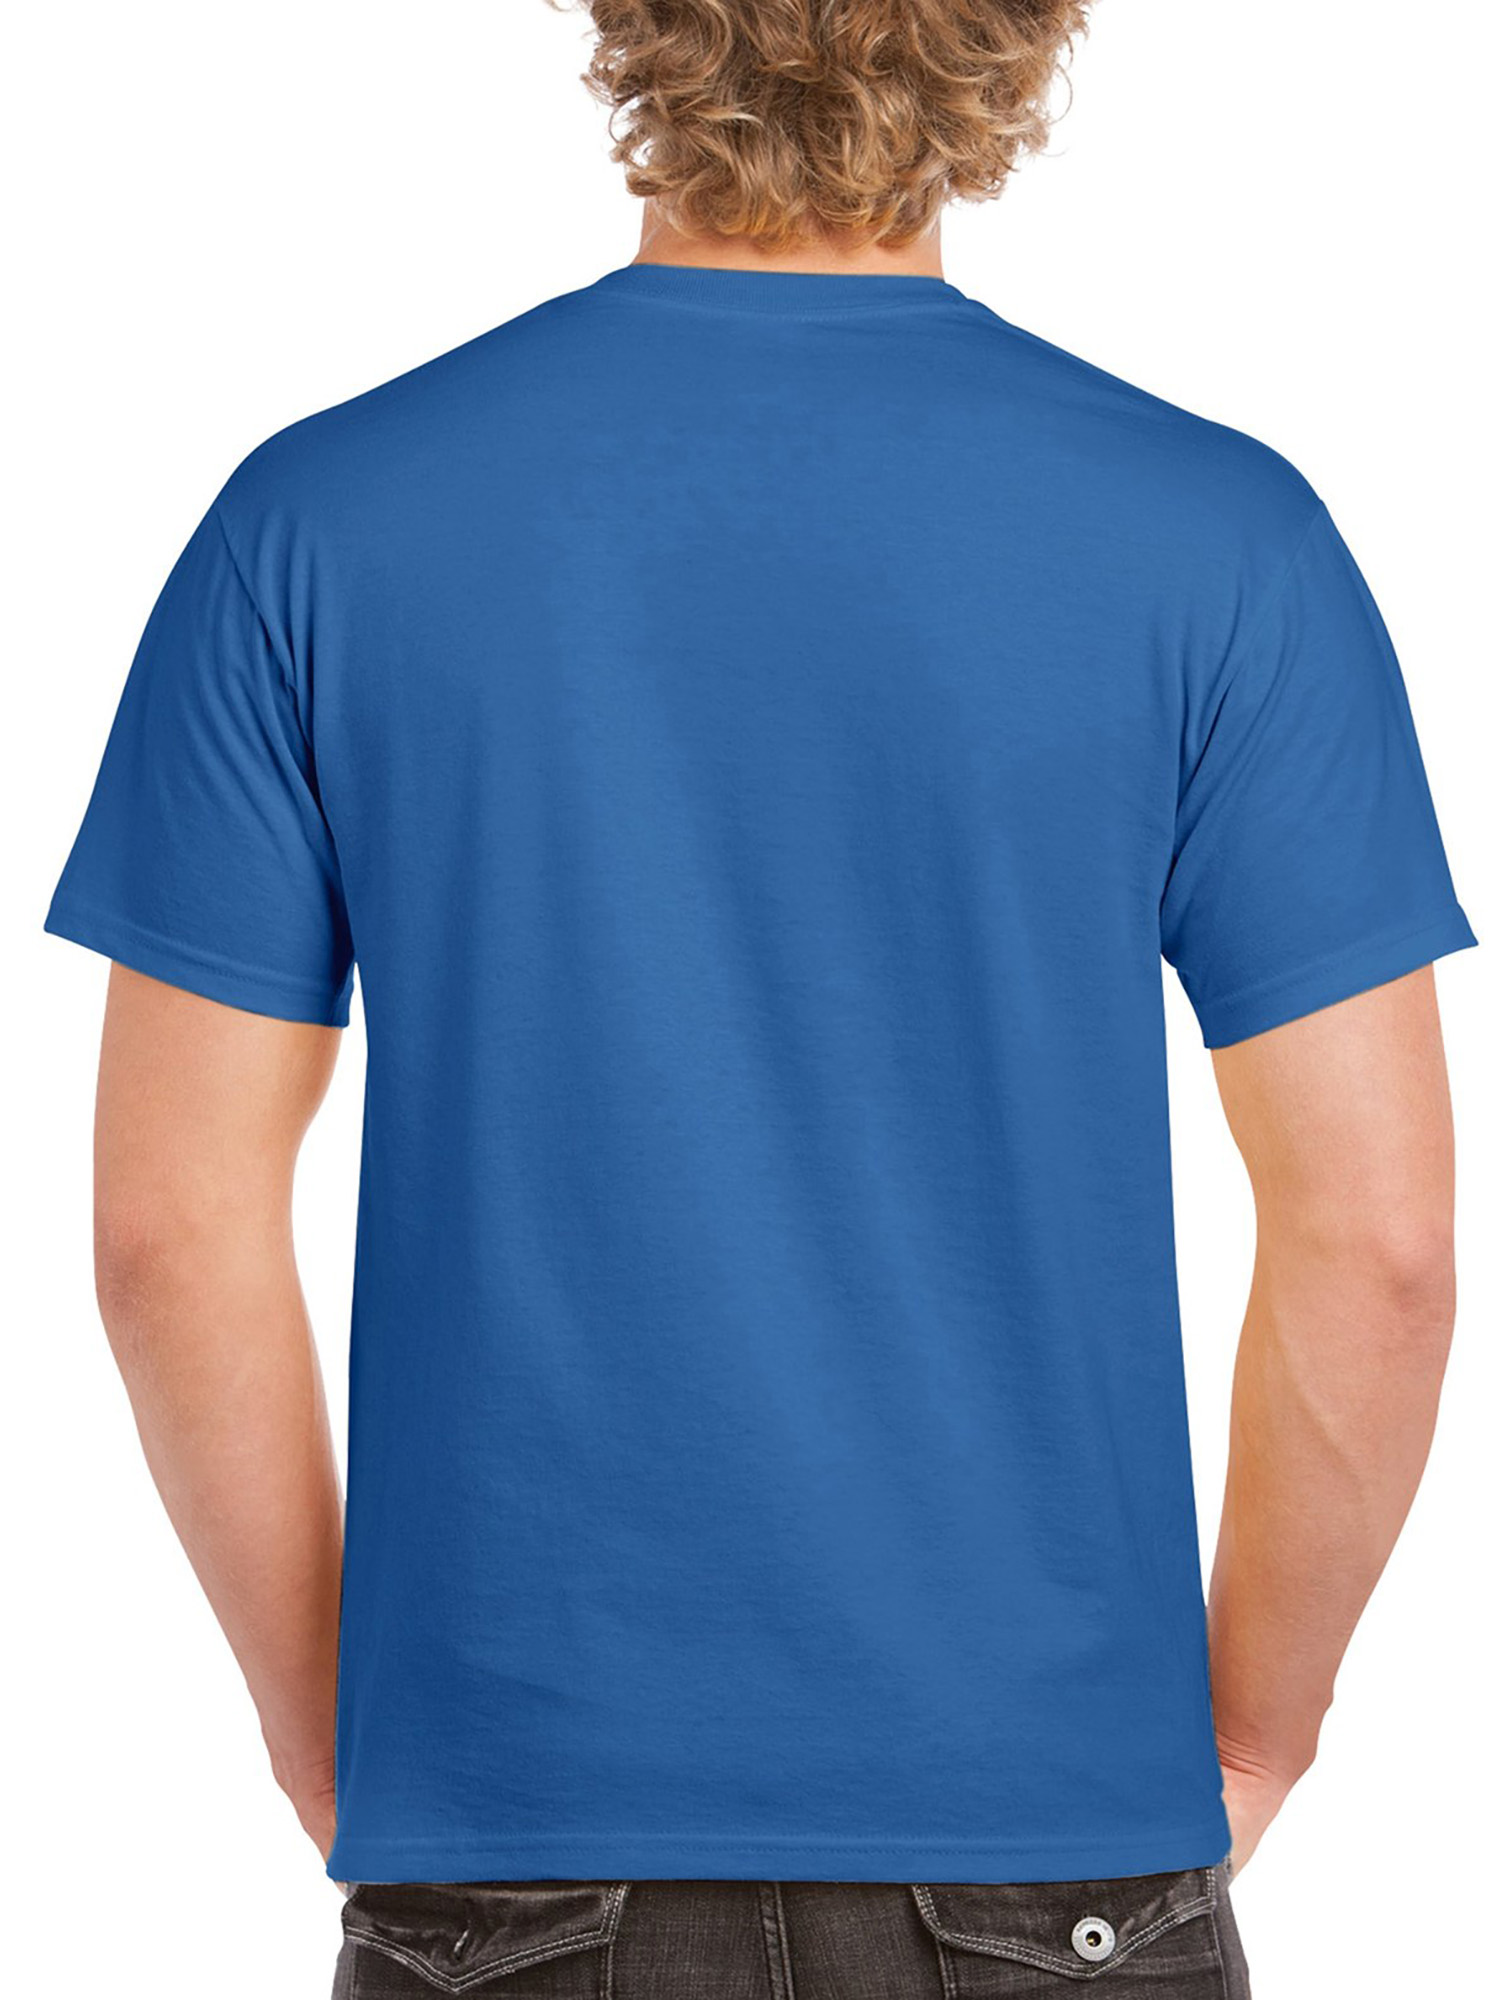 Gildan Men's Ultra Cotton Short Sleeve T-Shirt, 2-Pack, up to size 5XL - image 2 of 4